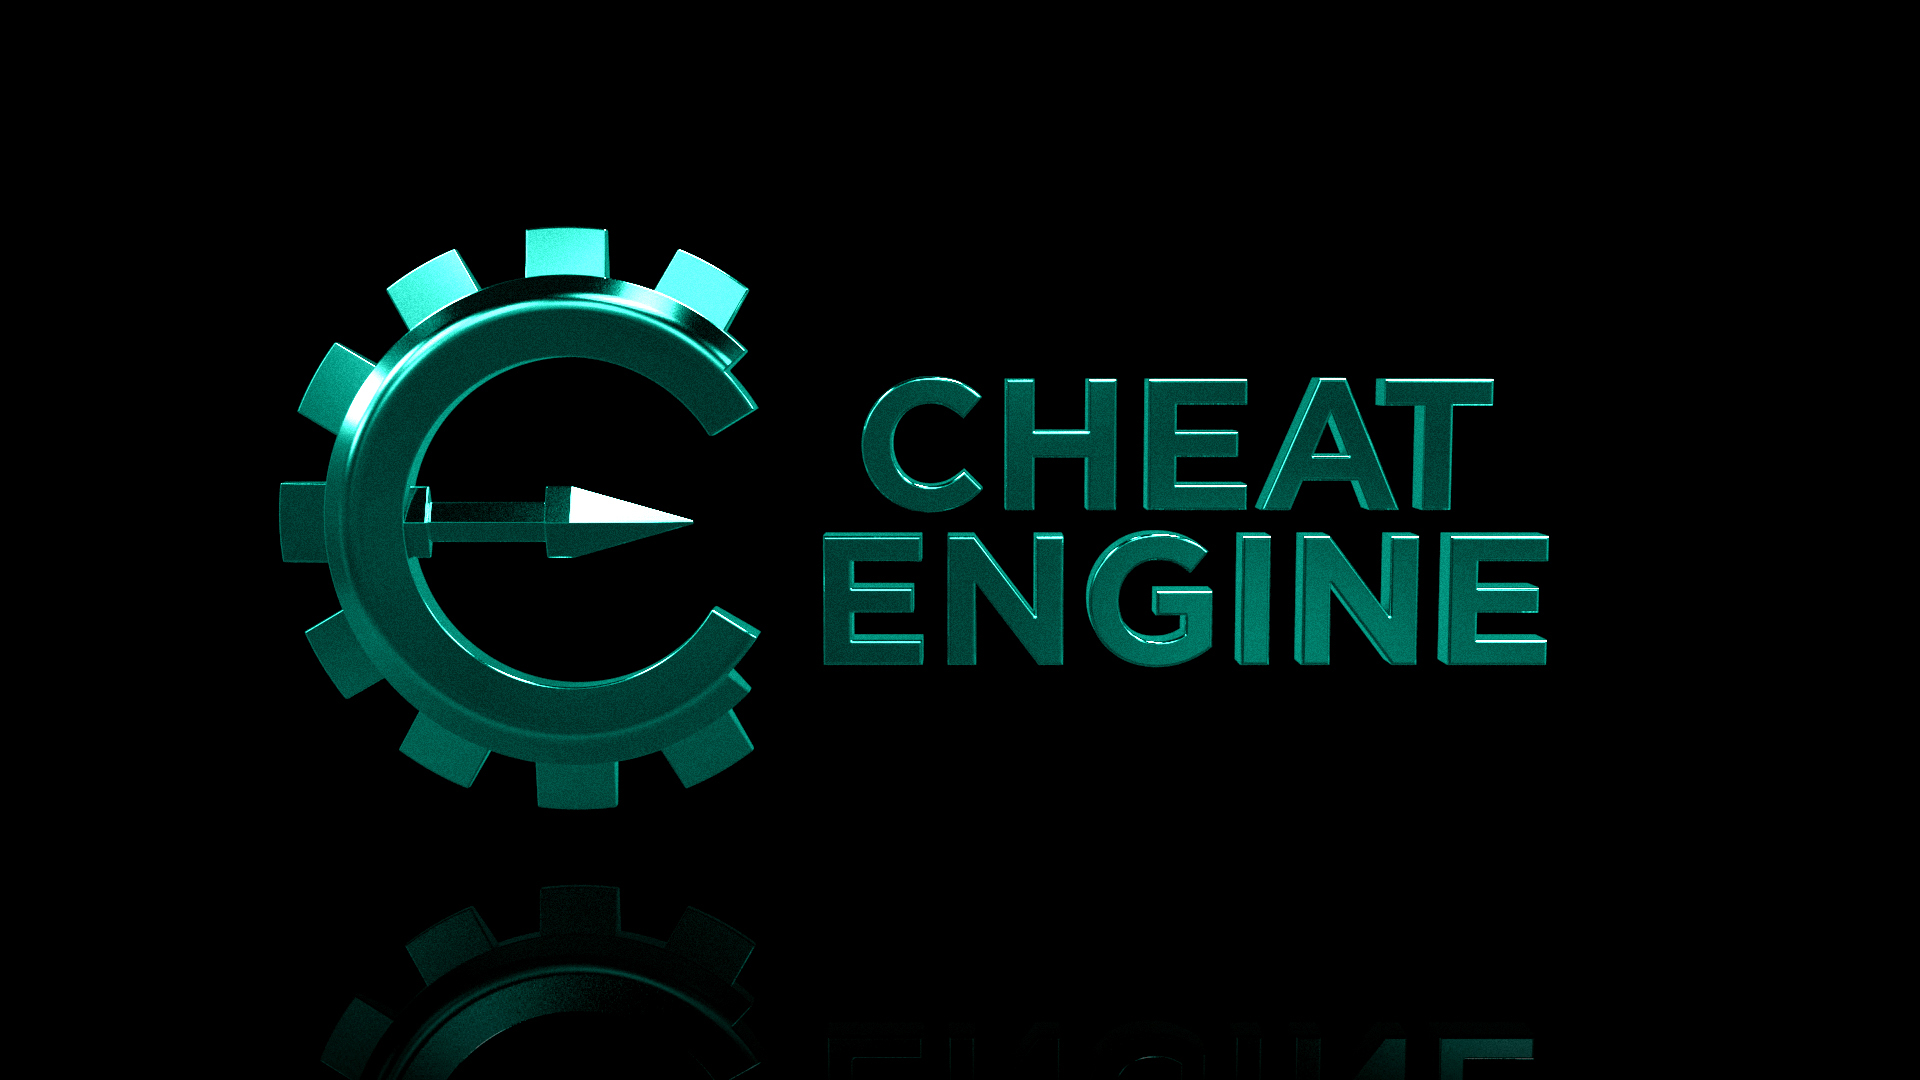 Cheat engine games. Cheat engine. Cheat engine логотип. Cheat engine русская версия. Читы Cheat engine.